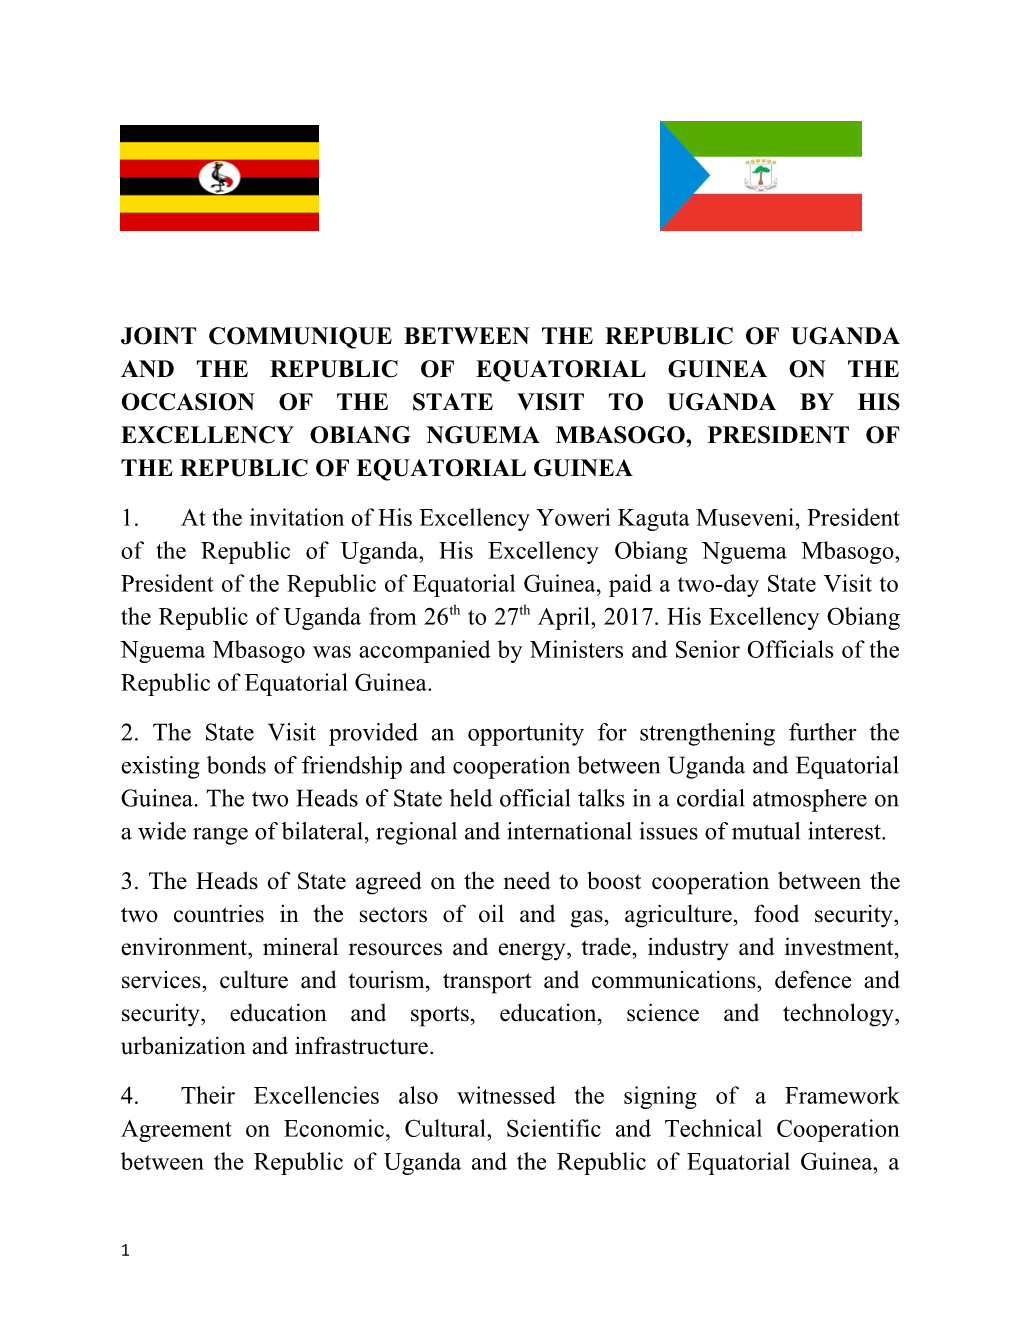 Joint Communique Between the Republic of Uganda and the Republic of Equatorial Guinea